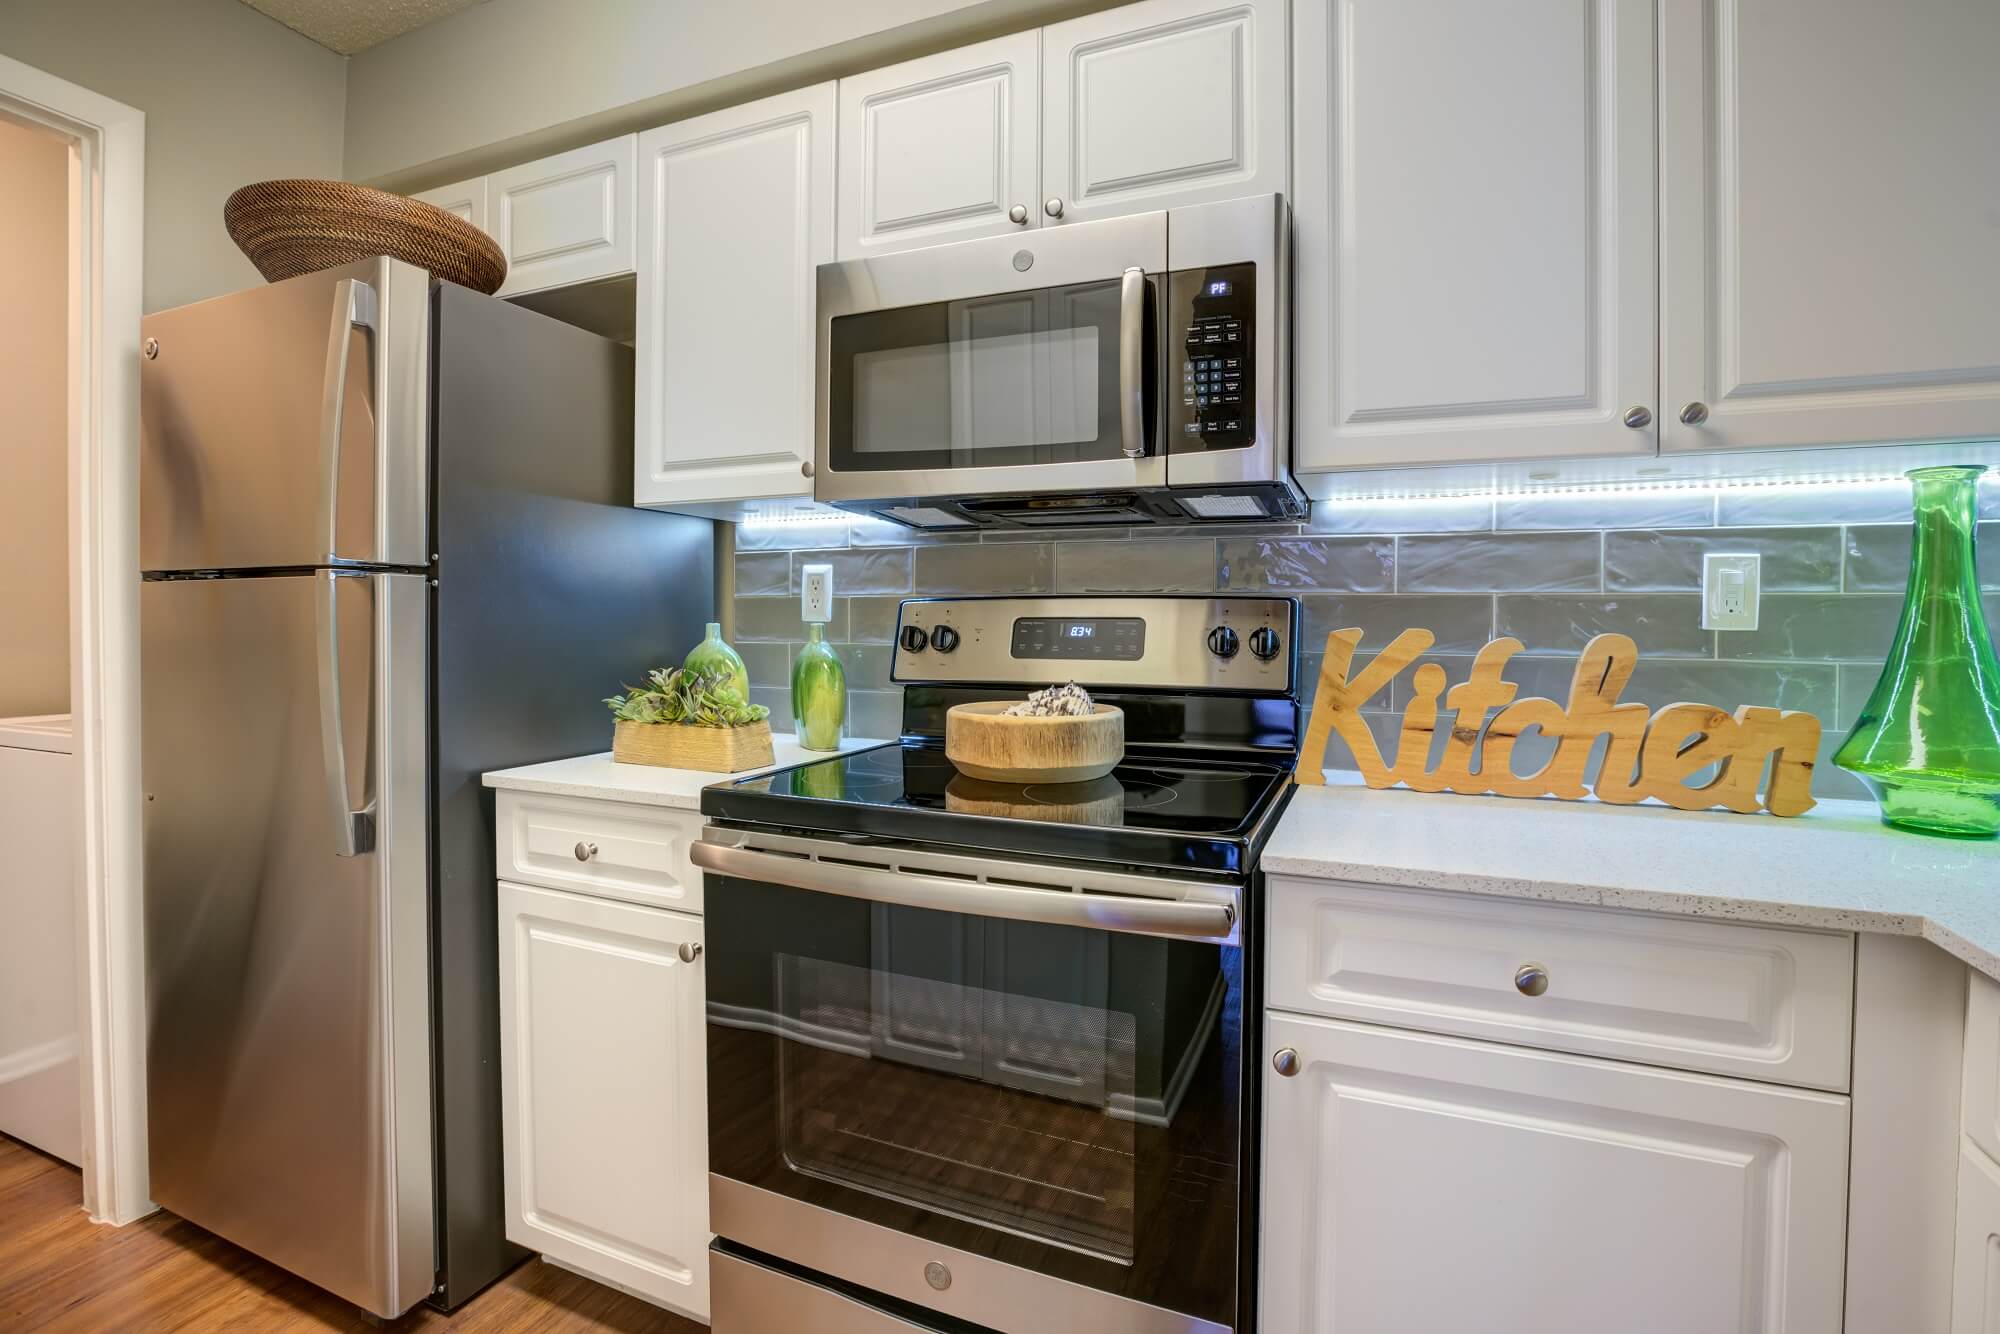 kitchen area with tile backsplash, stove, microwave, and fridge.